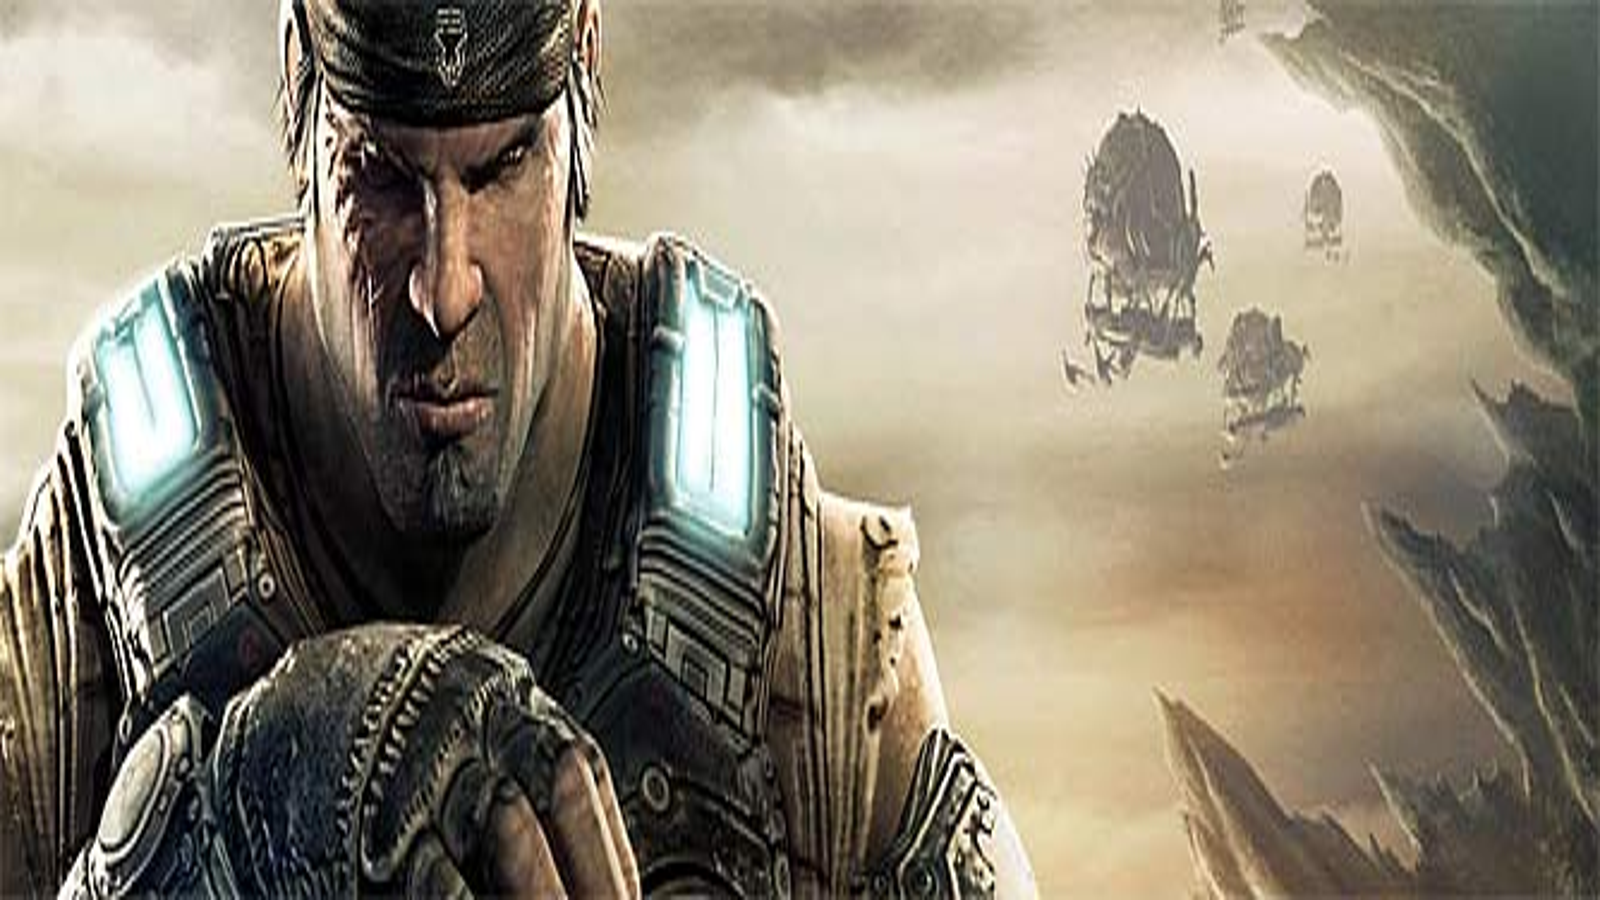 Gears of War 4 beta to kick off in April